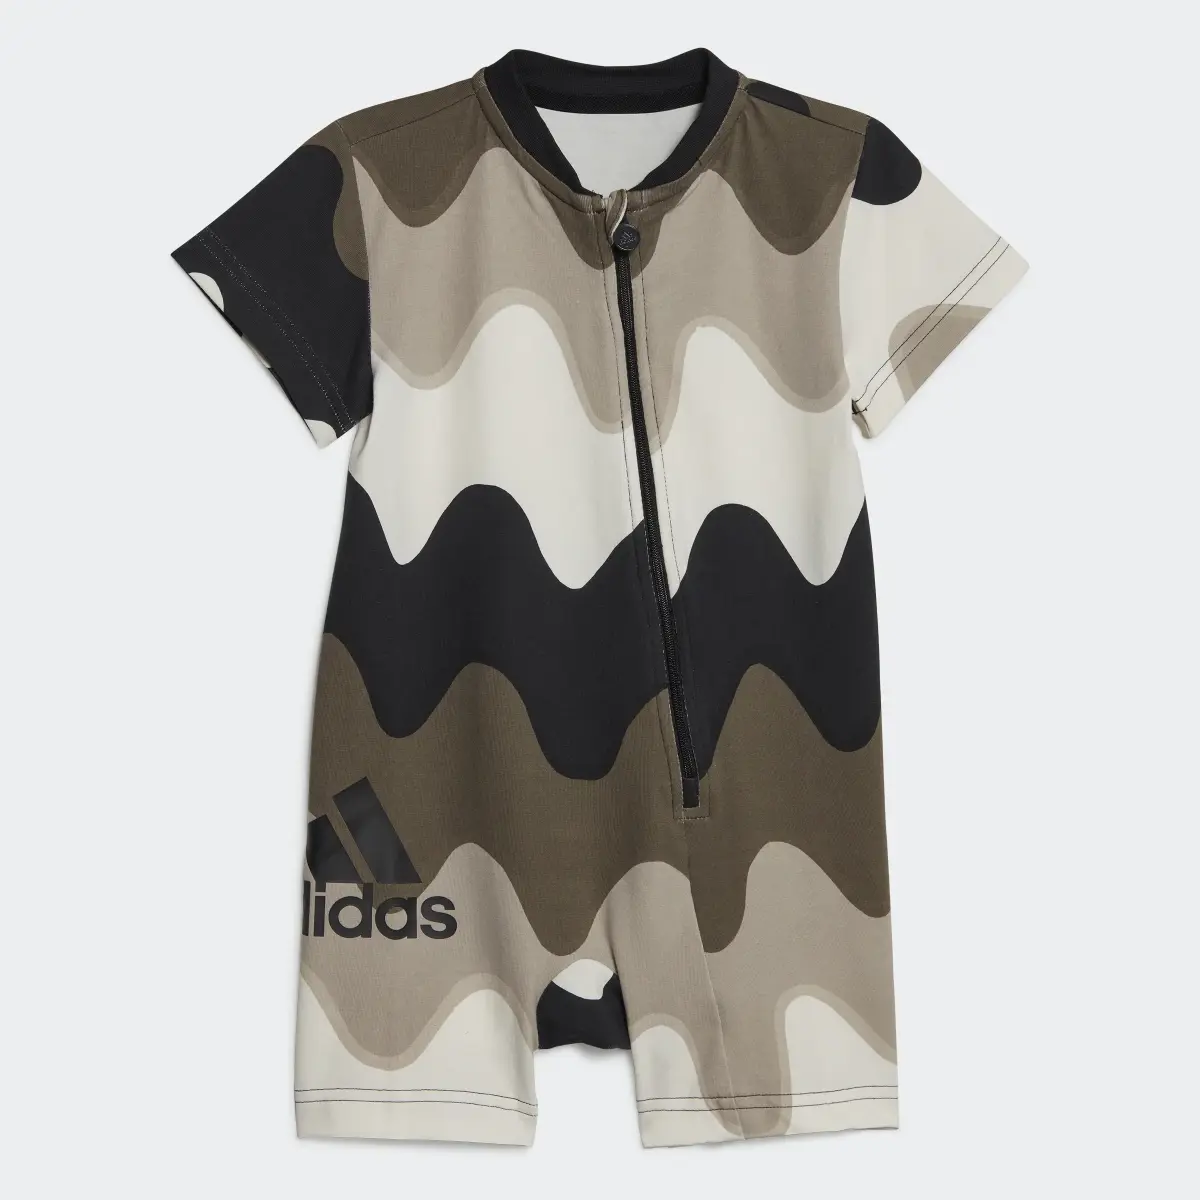 Adidas x Marimekko Allover Print Cotton Bodysuit. 1